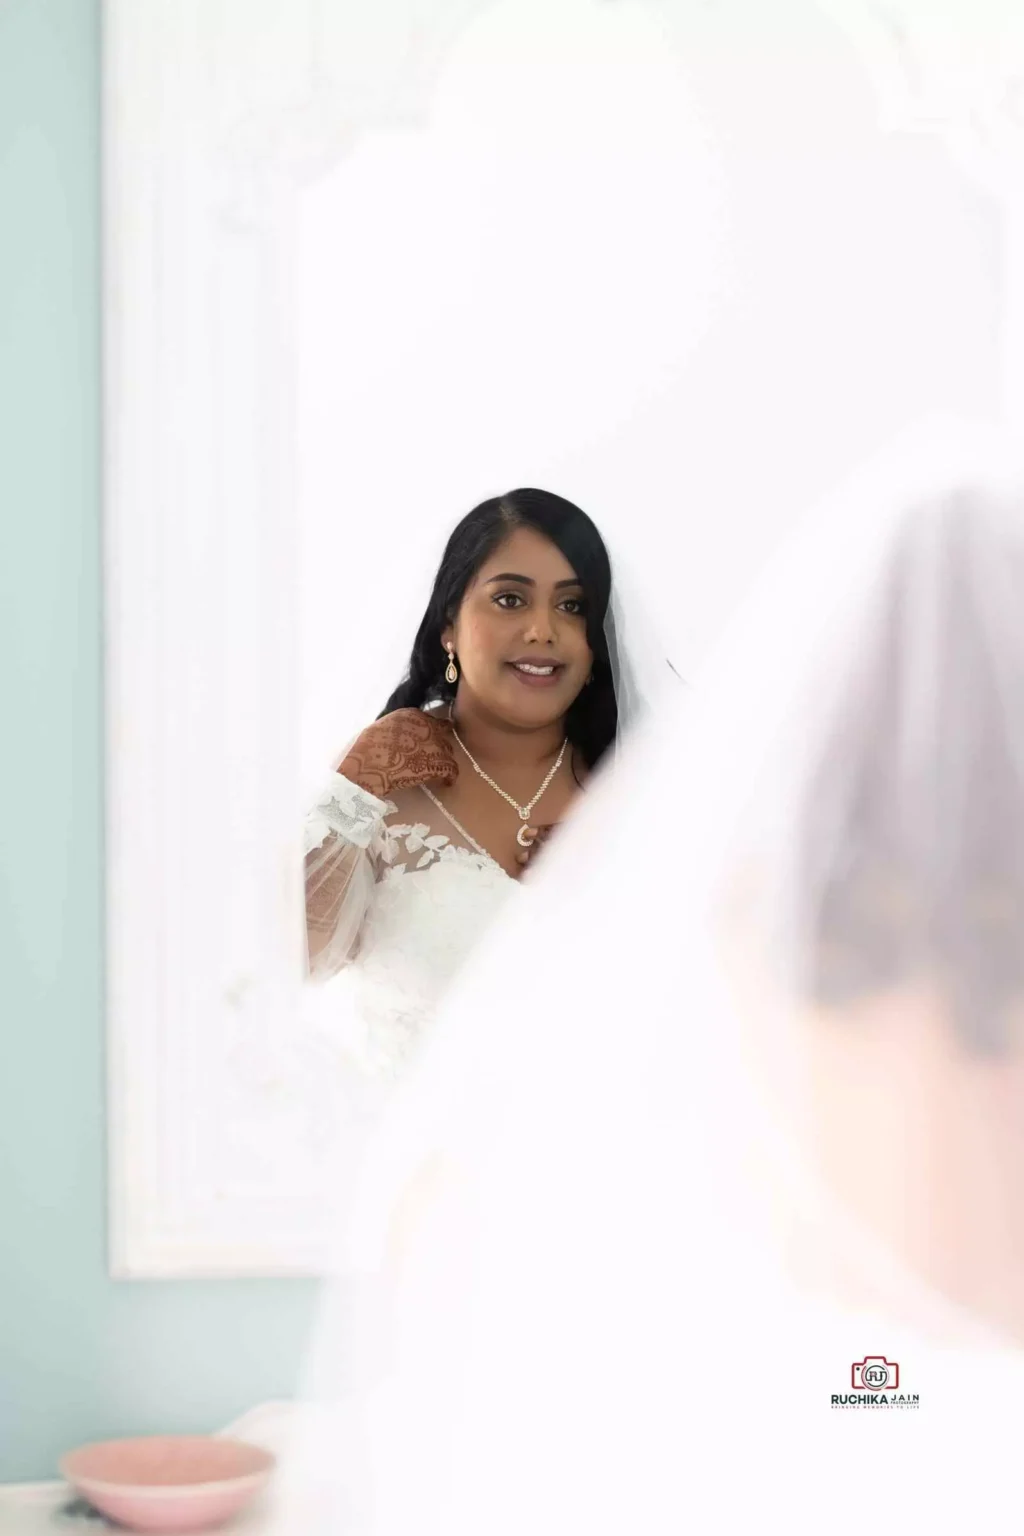 Wedding Preparation - Bride Standing Before the Mirror in Wellington, New Zealand